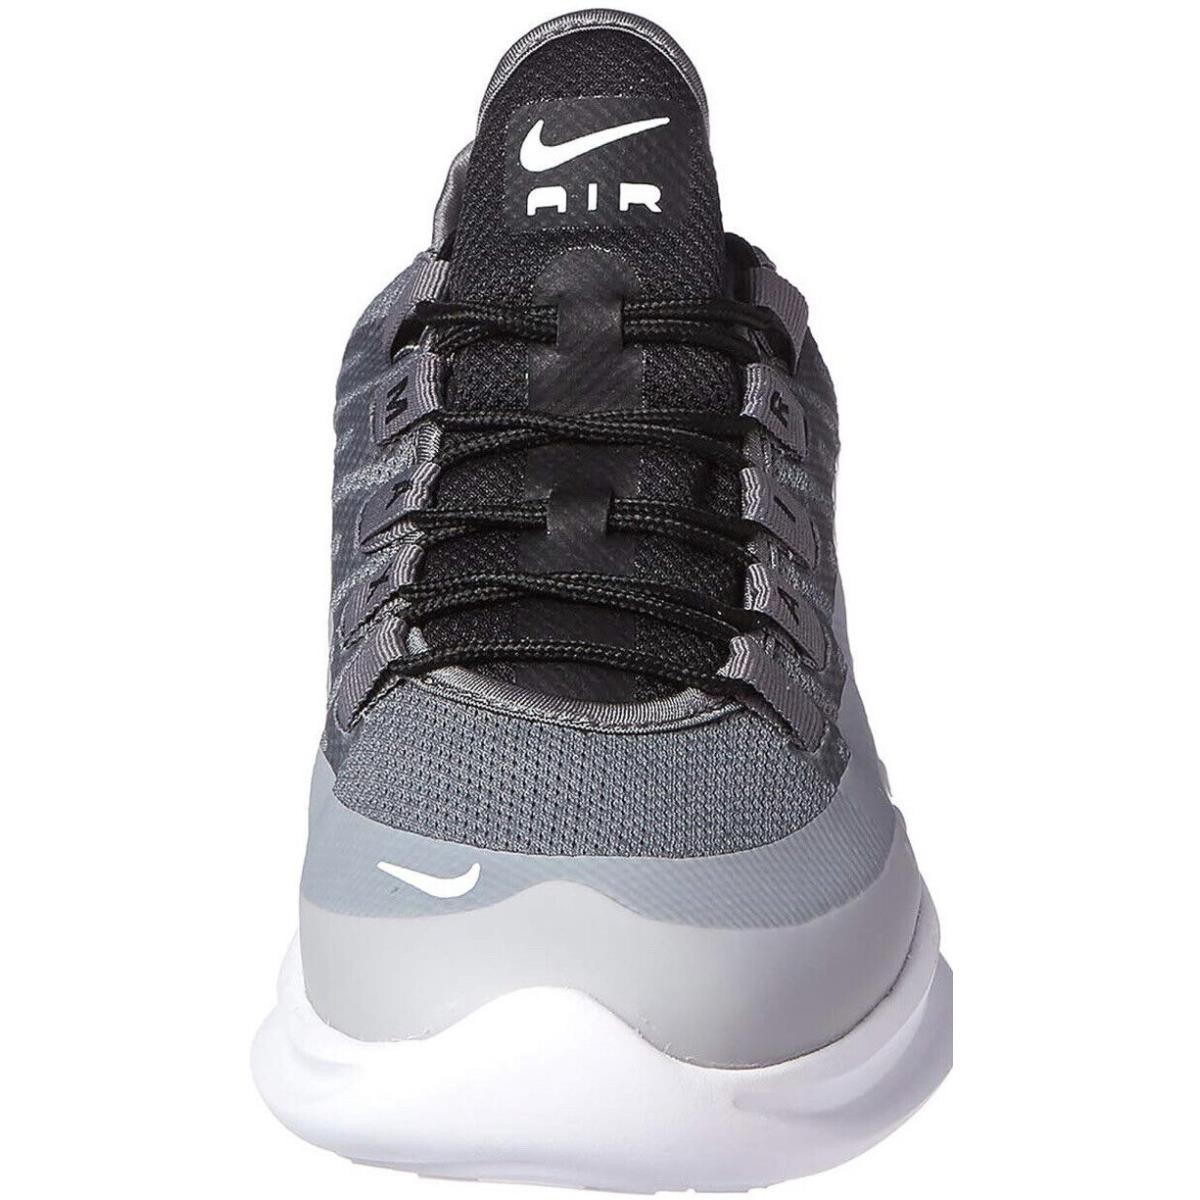 Nike shoes Air Max Axis - Cool Grey/Pure Platinum /Igloo 4